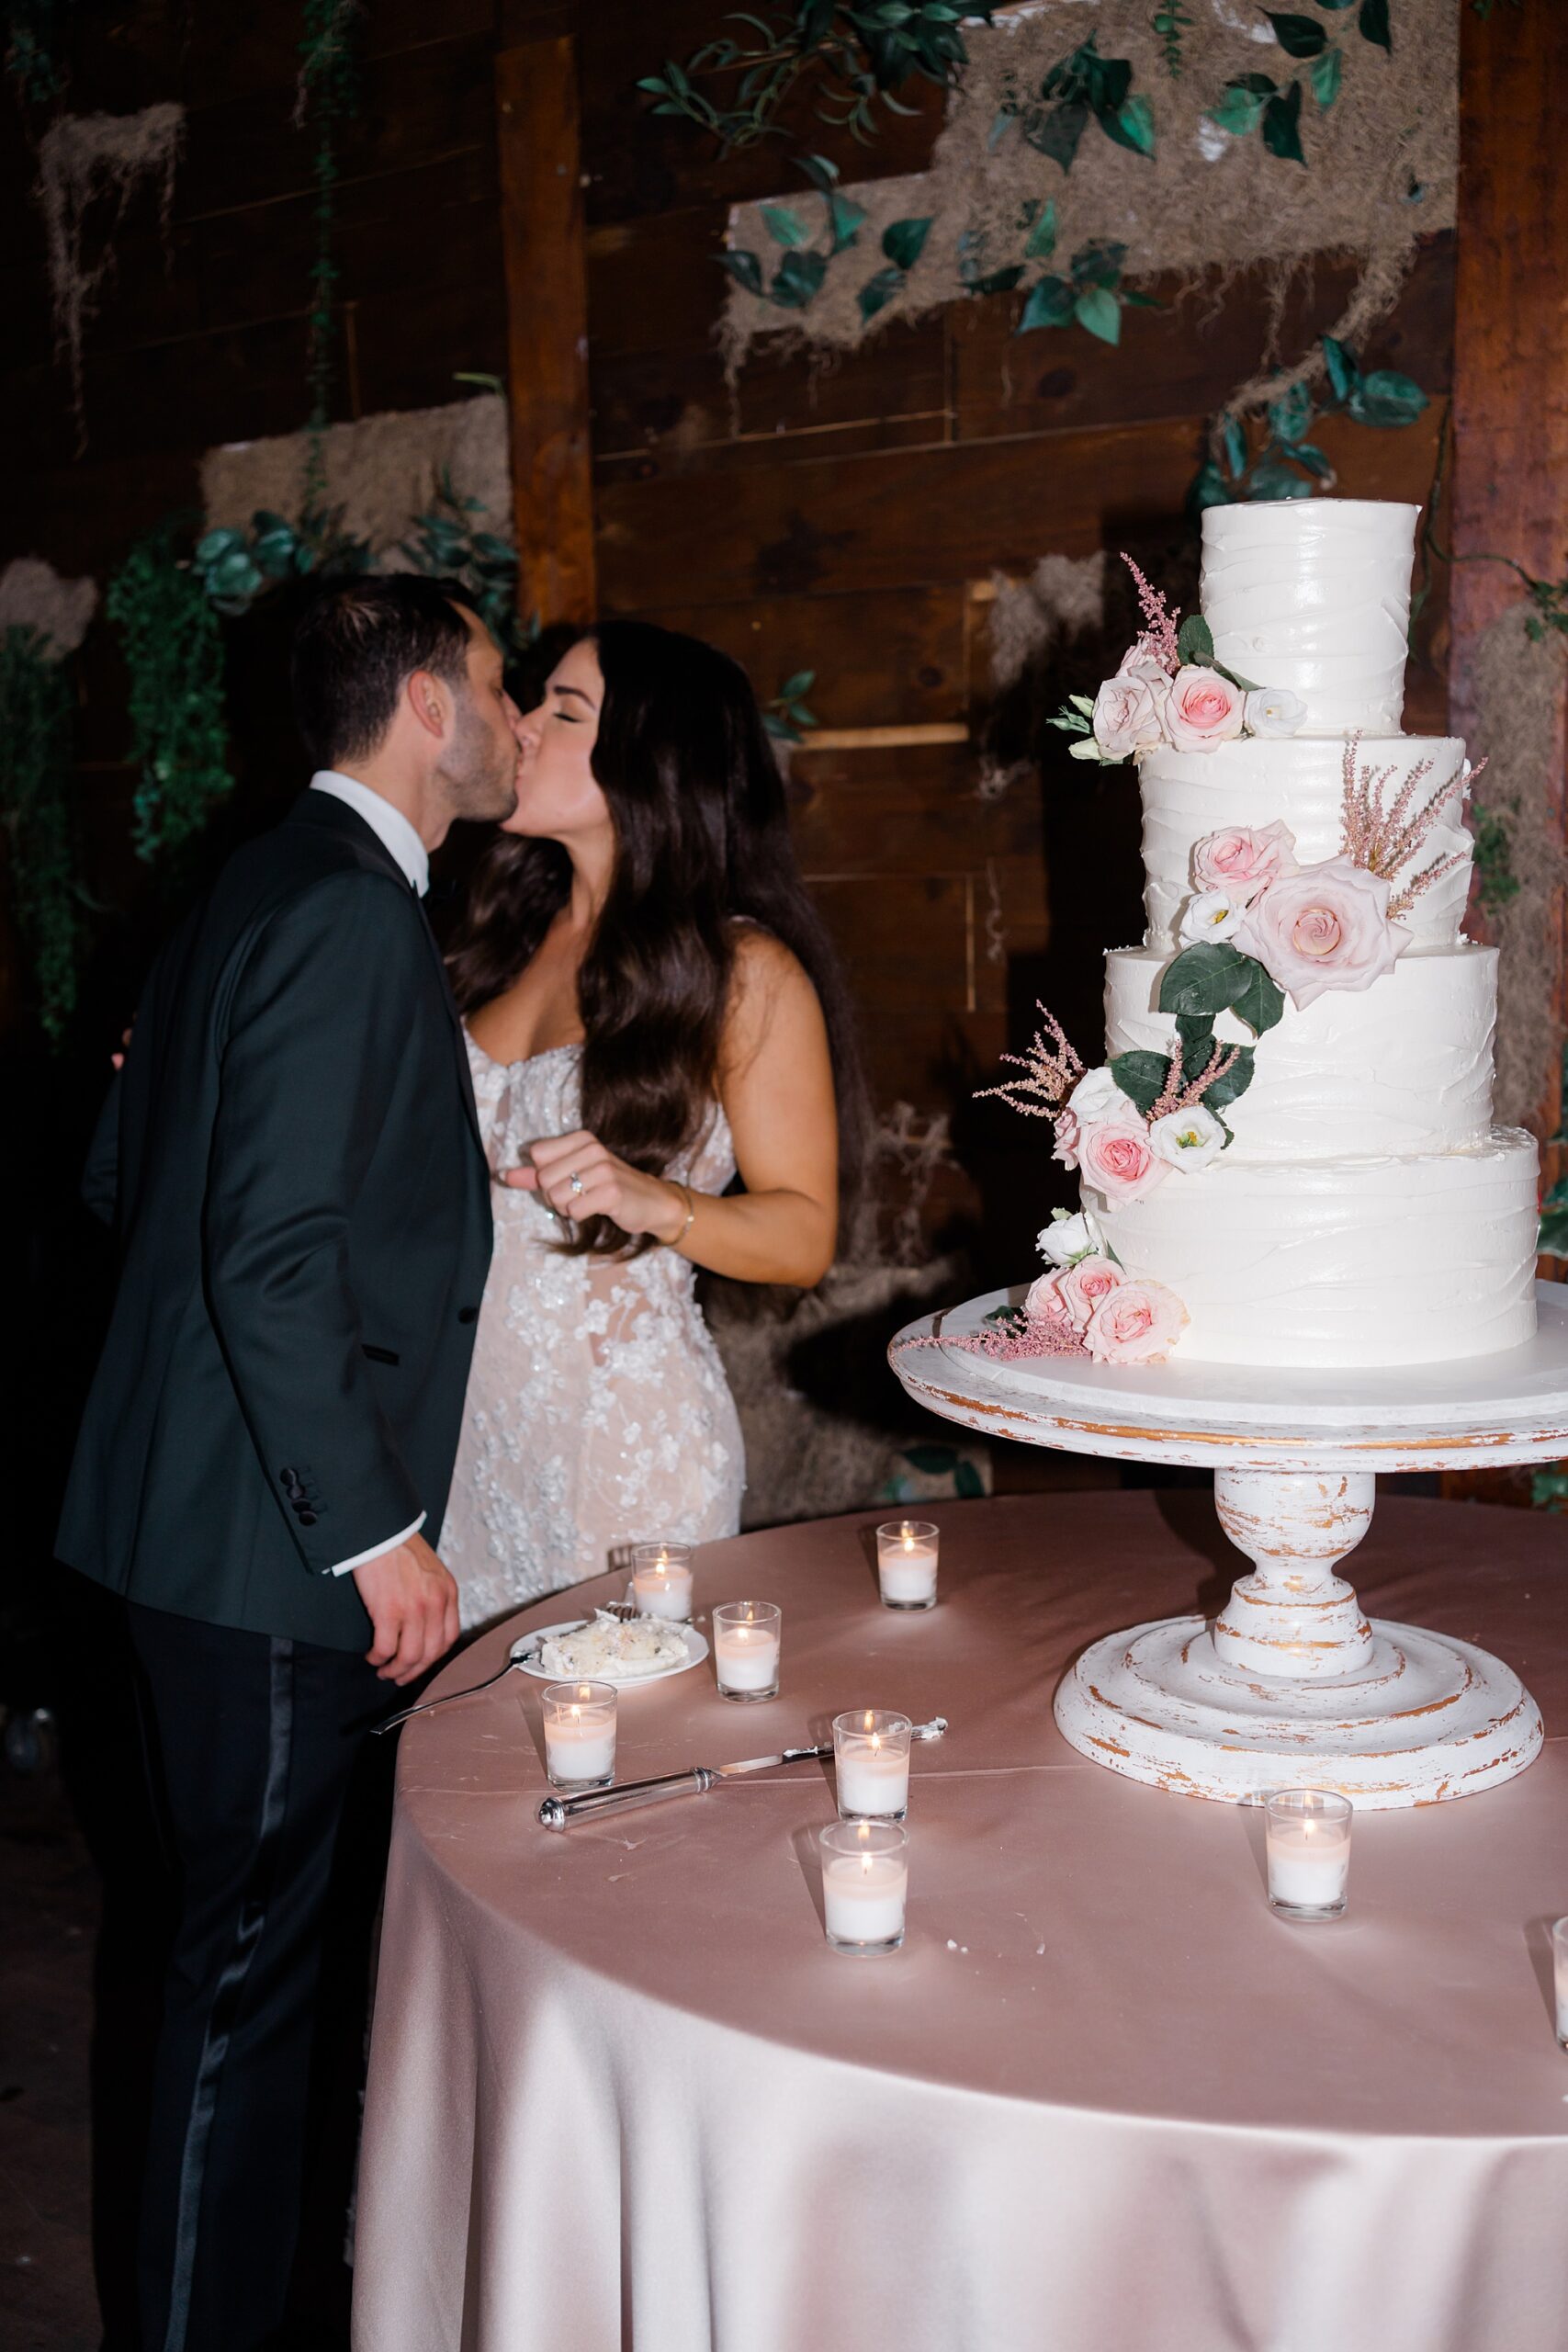 newlyweds kiss by wedding cake